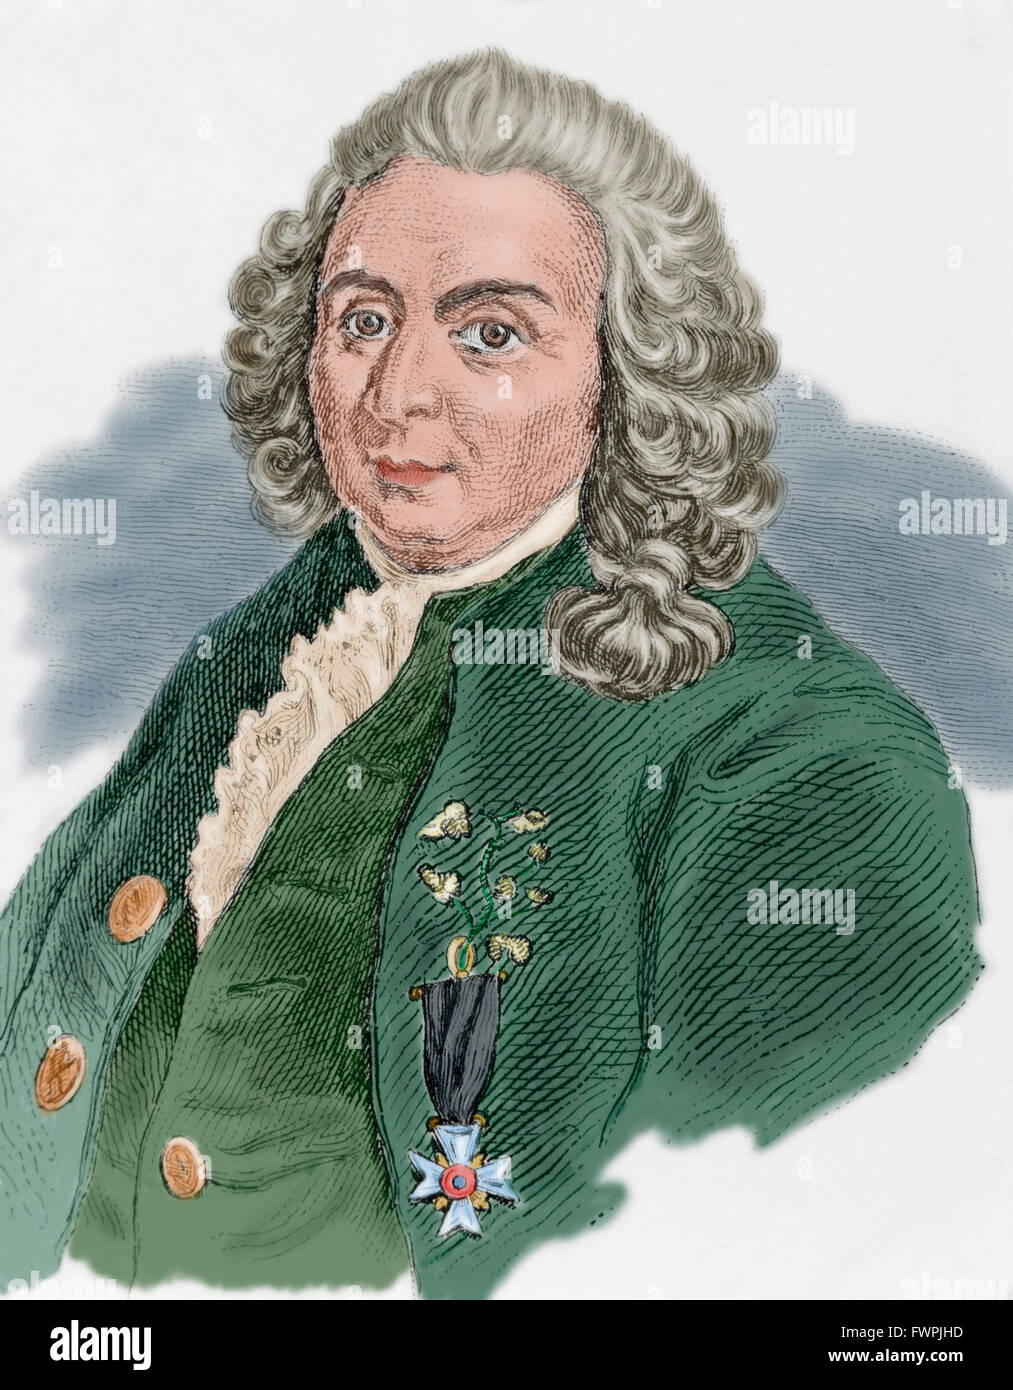 Carl Linnaeus (1707-1778). Swedish physician and botanist. Portrait. Engraving. Colored. Stock Photo